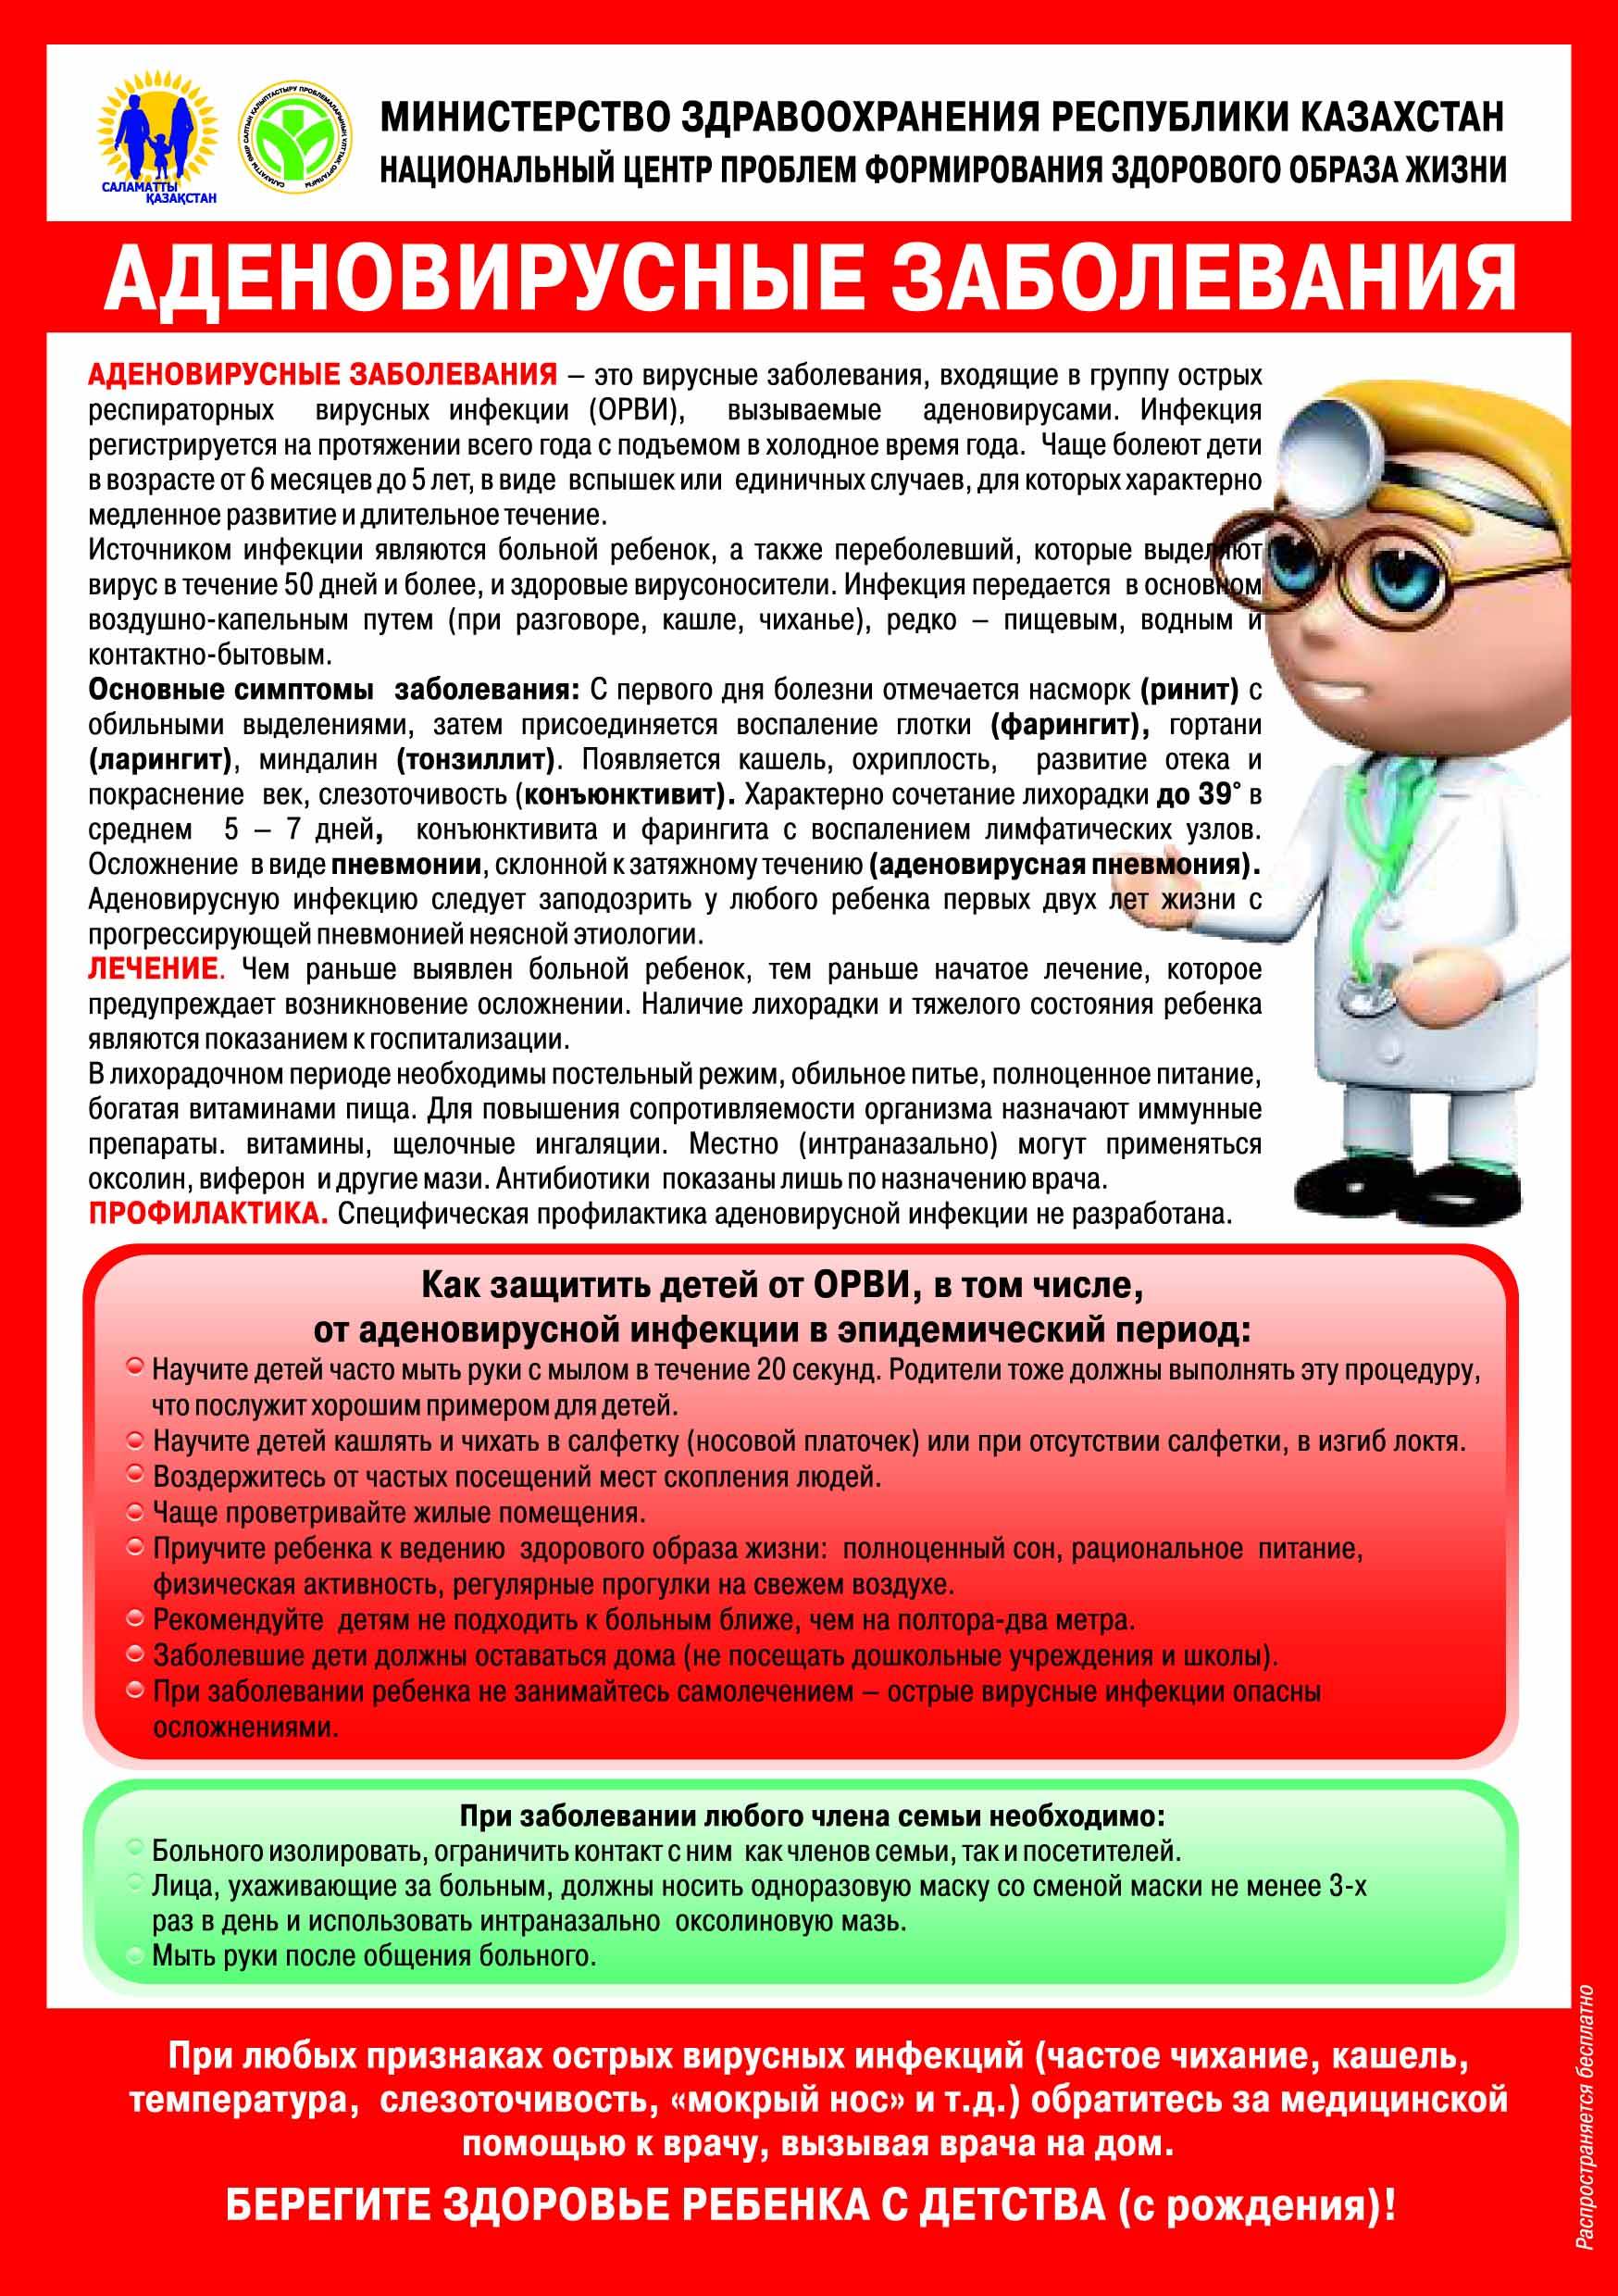 Аденовирусный конъюнктивит: причины, симптомы, лечение - энциклопедия ochkov.net